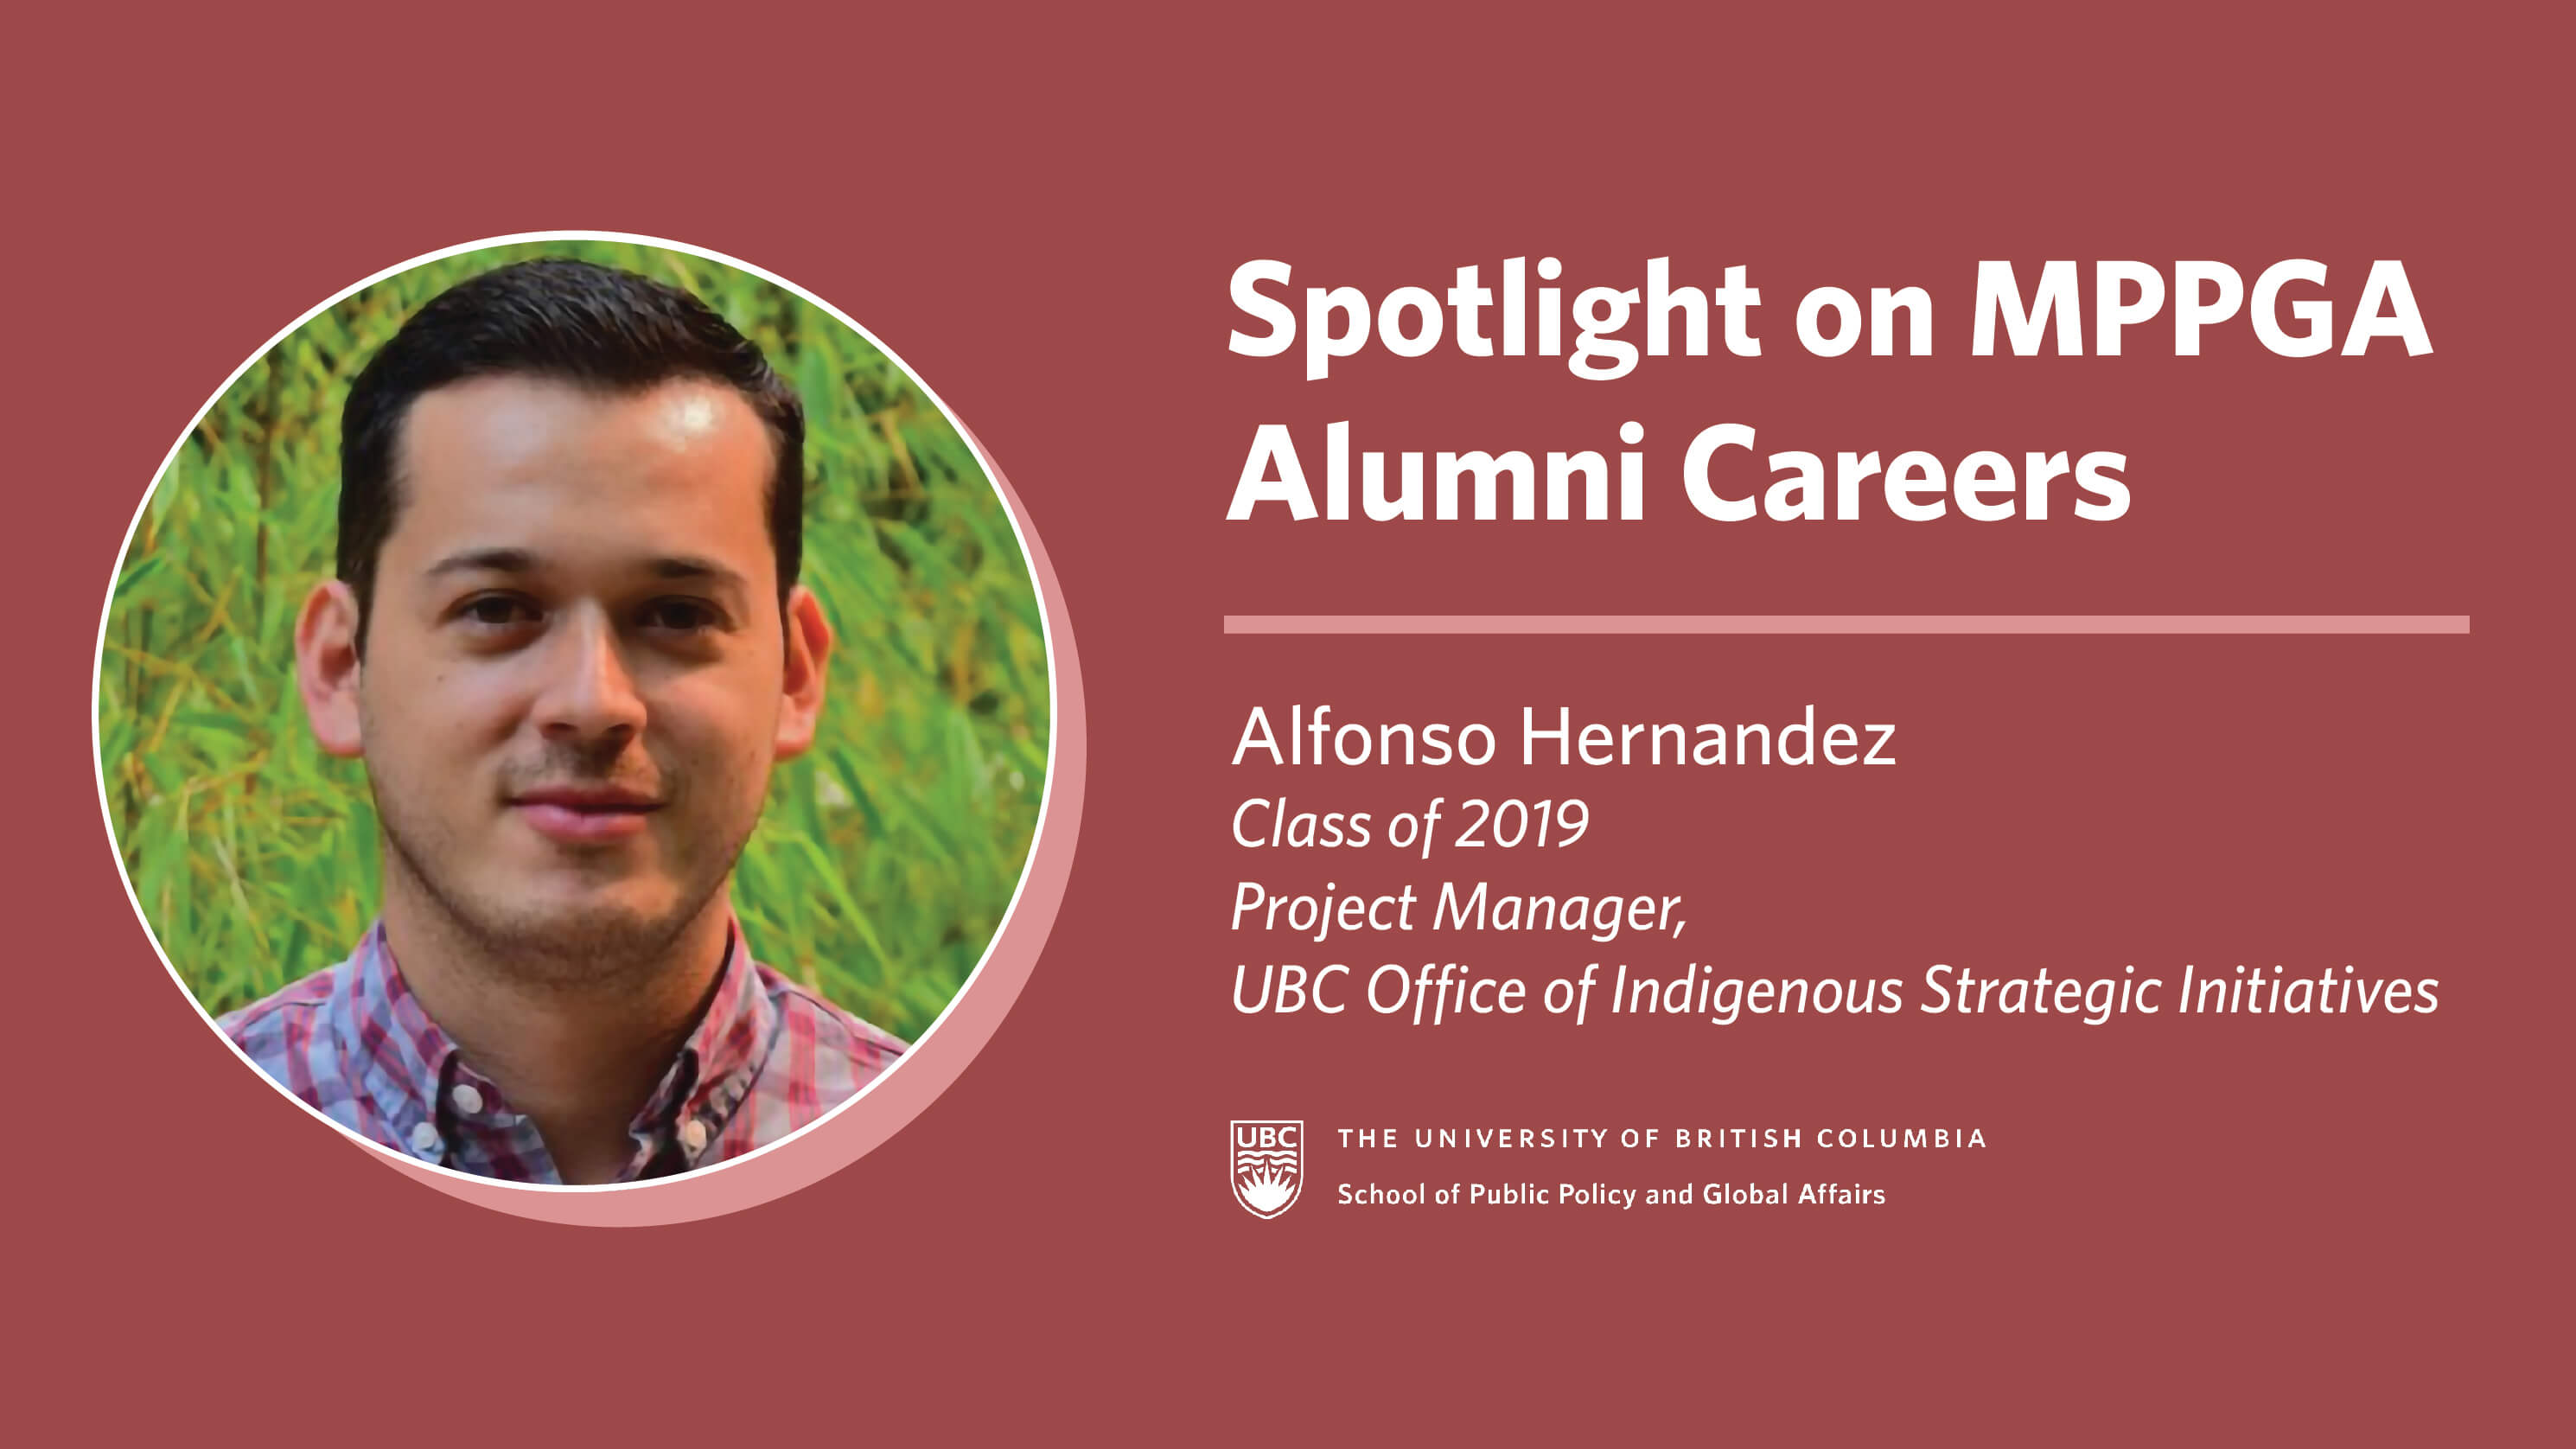 Alfonso Hernandez Alumni Spotlight